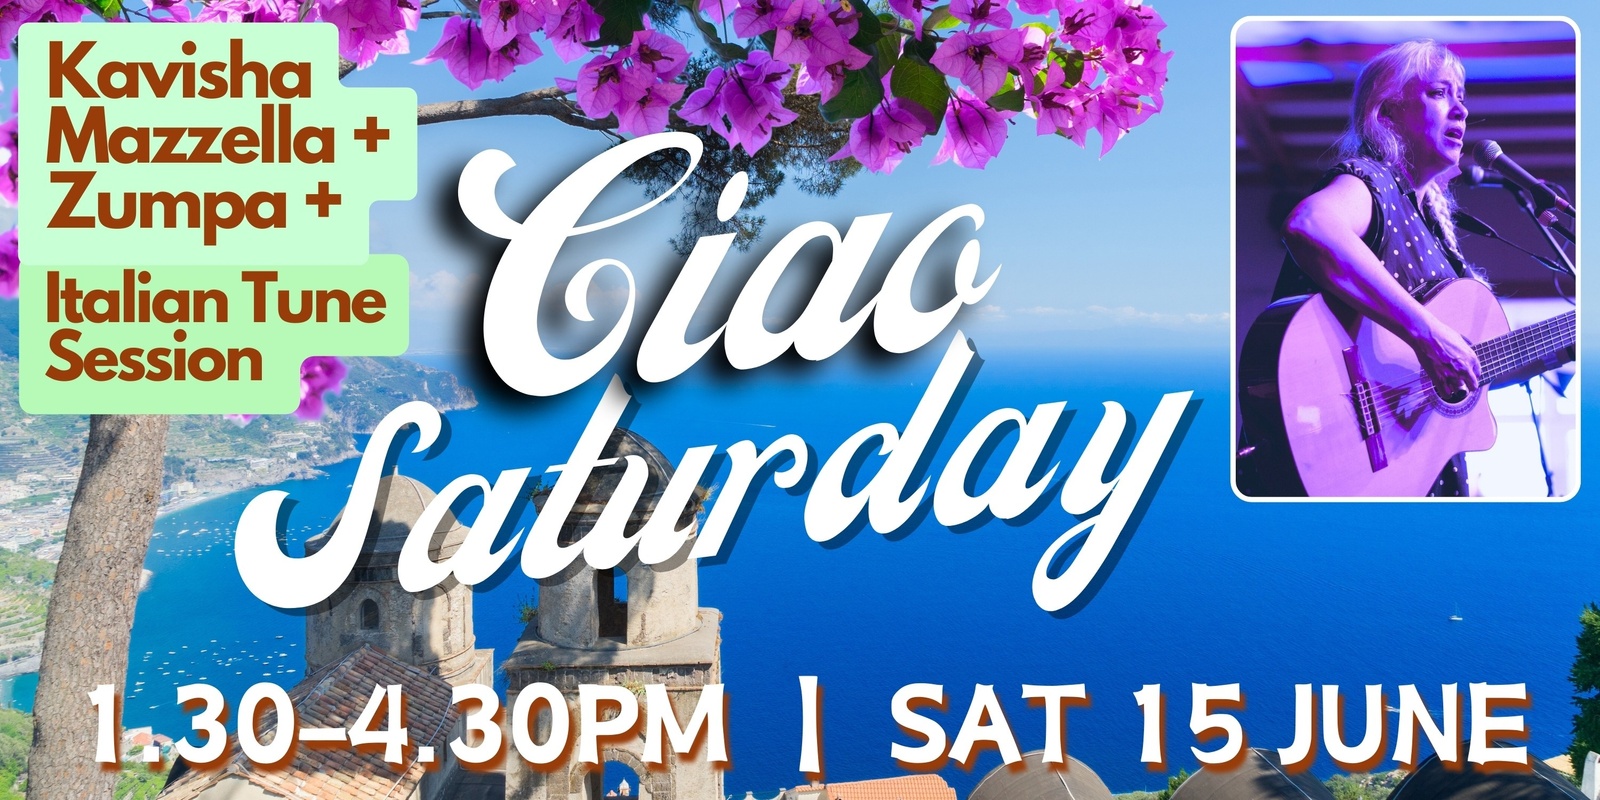 Banner image for Ciao Saturday - concert with Kavisha Mazzella and Zumpa and Italian folk tune session